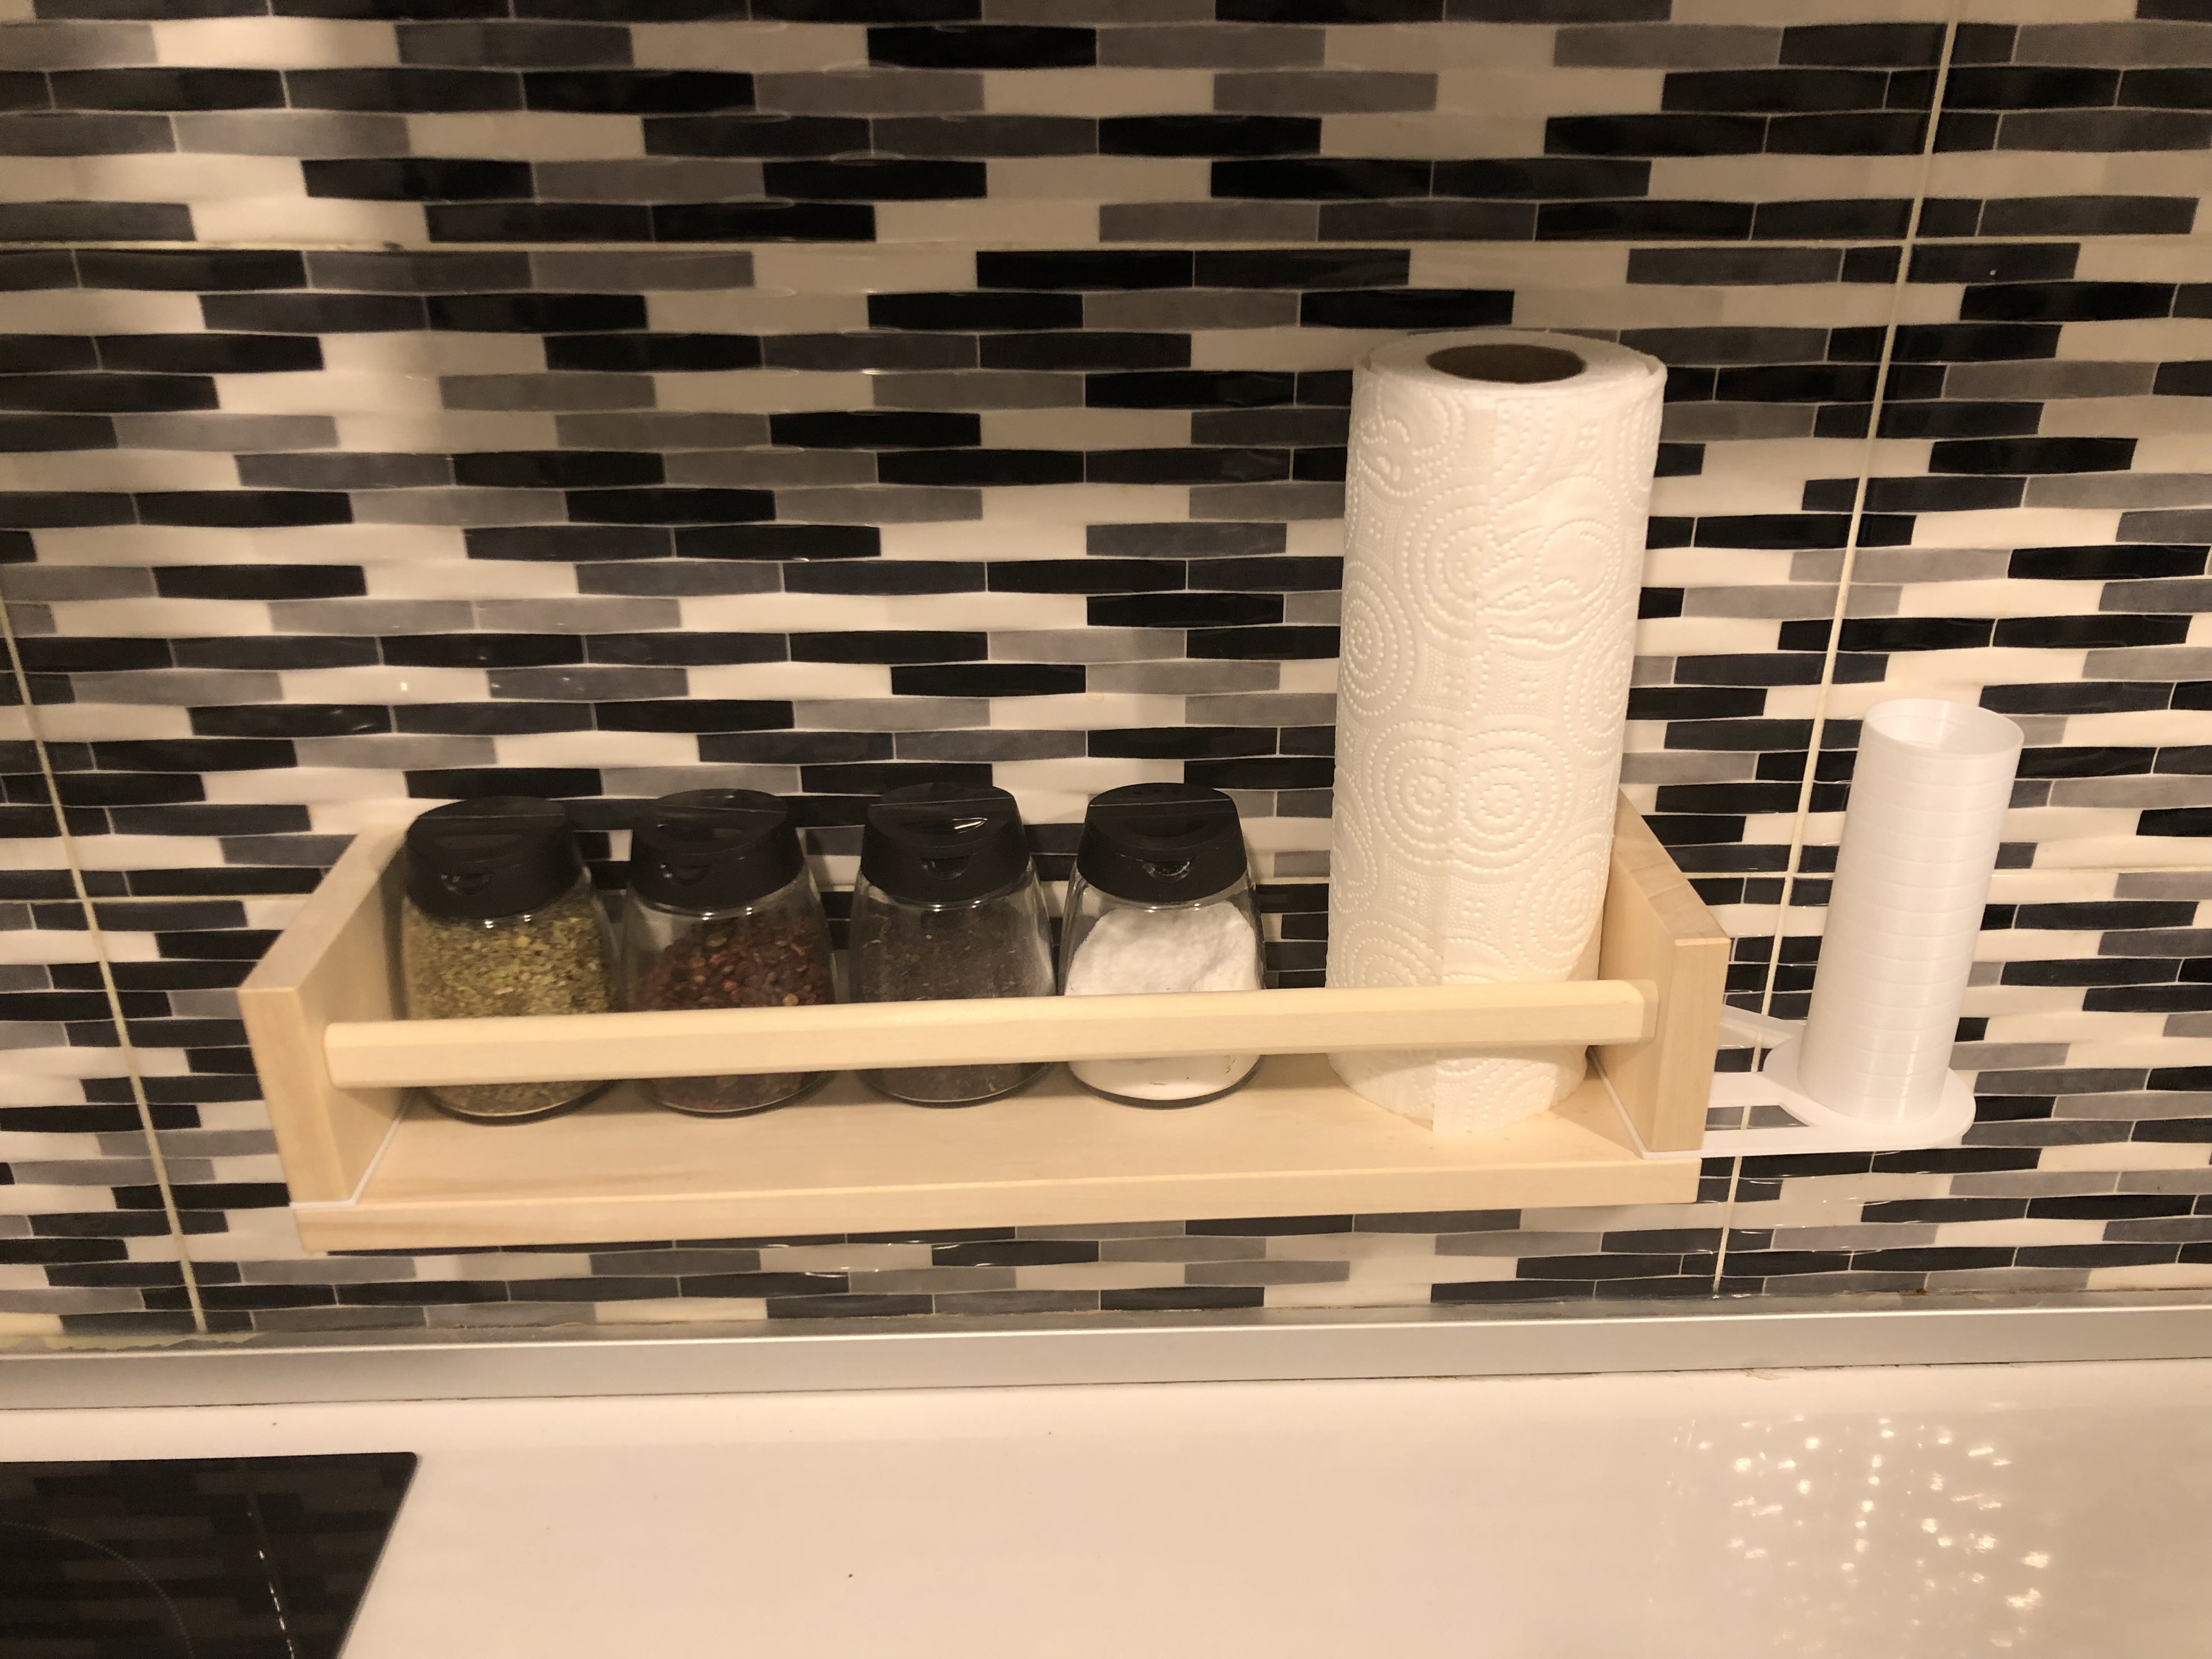 Paper Towel Roll Holder for IKEA BEKVÄM spice rack